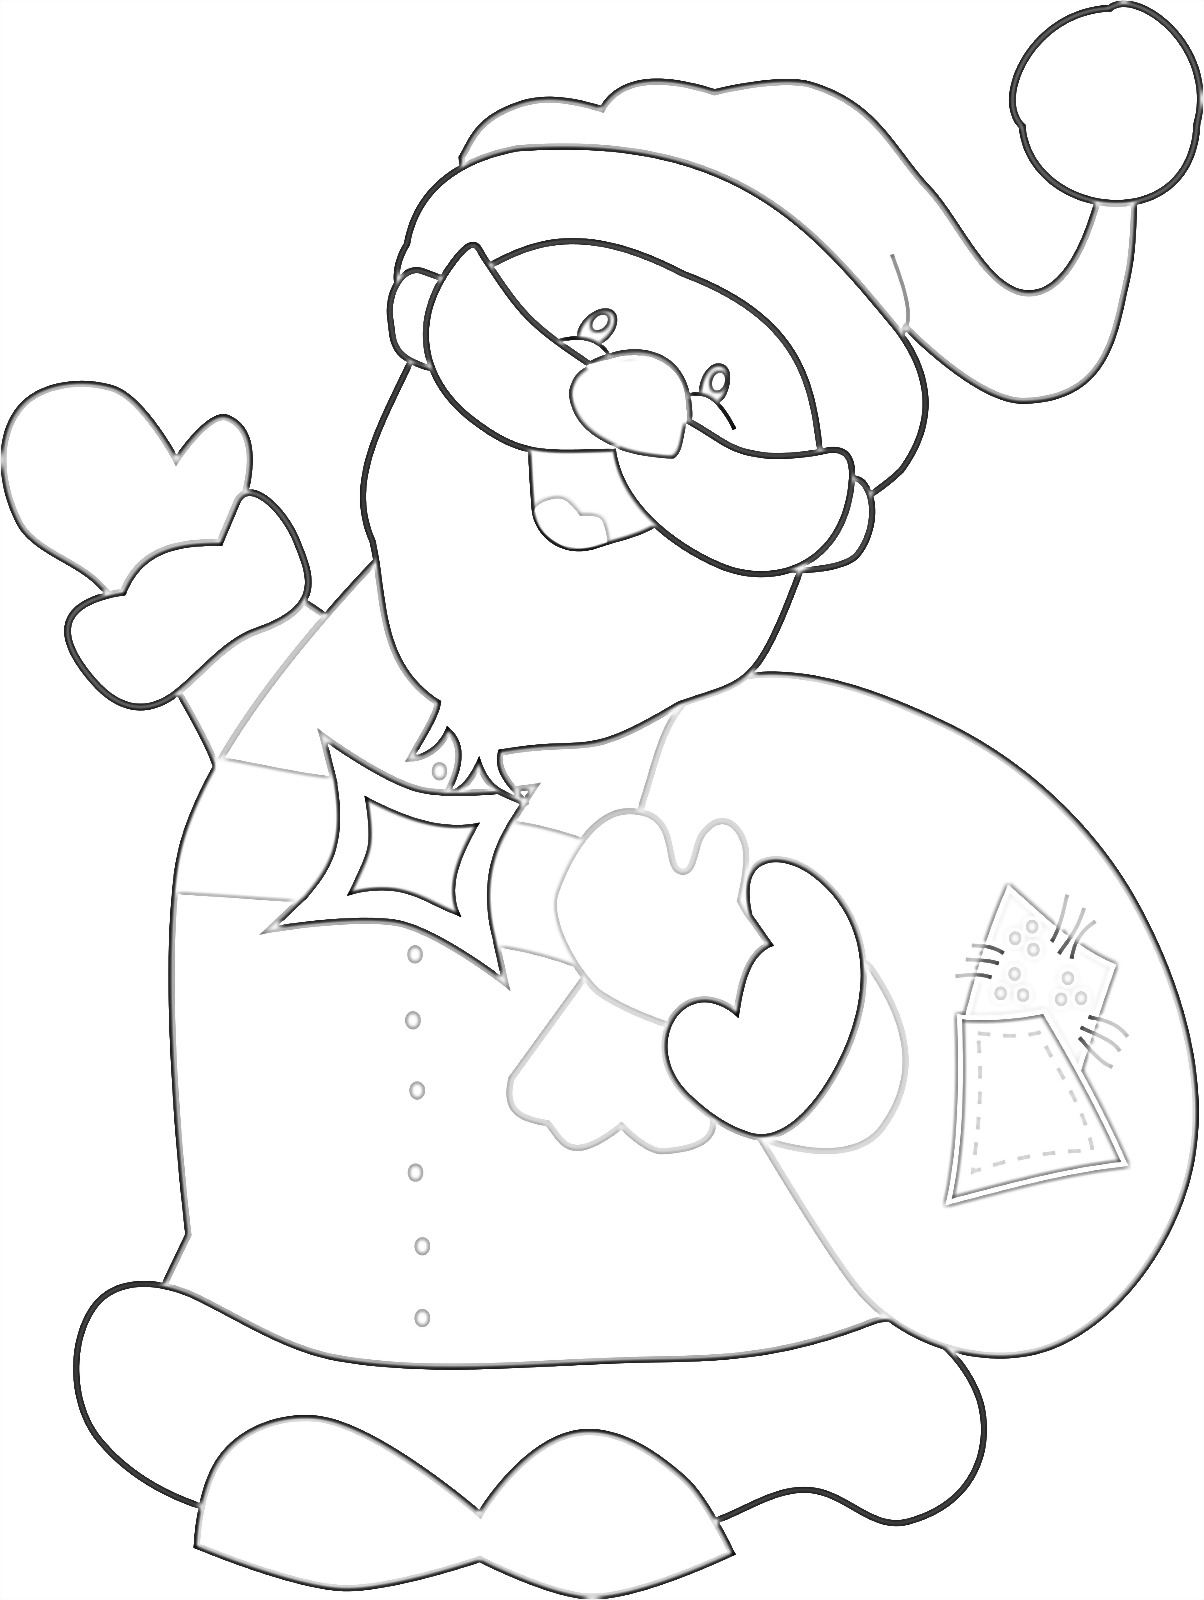 Santa claus with bag coloring page